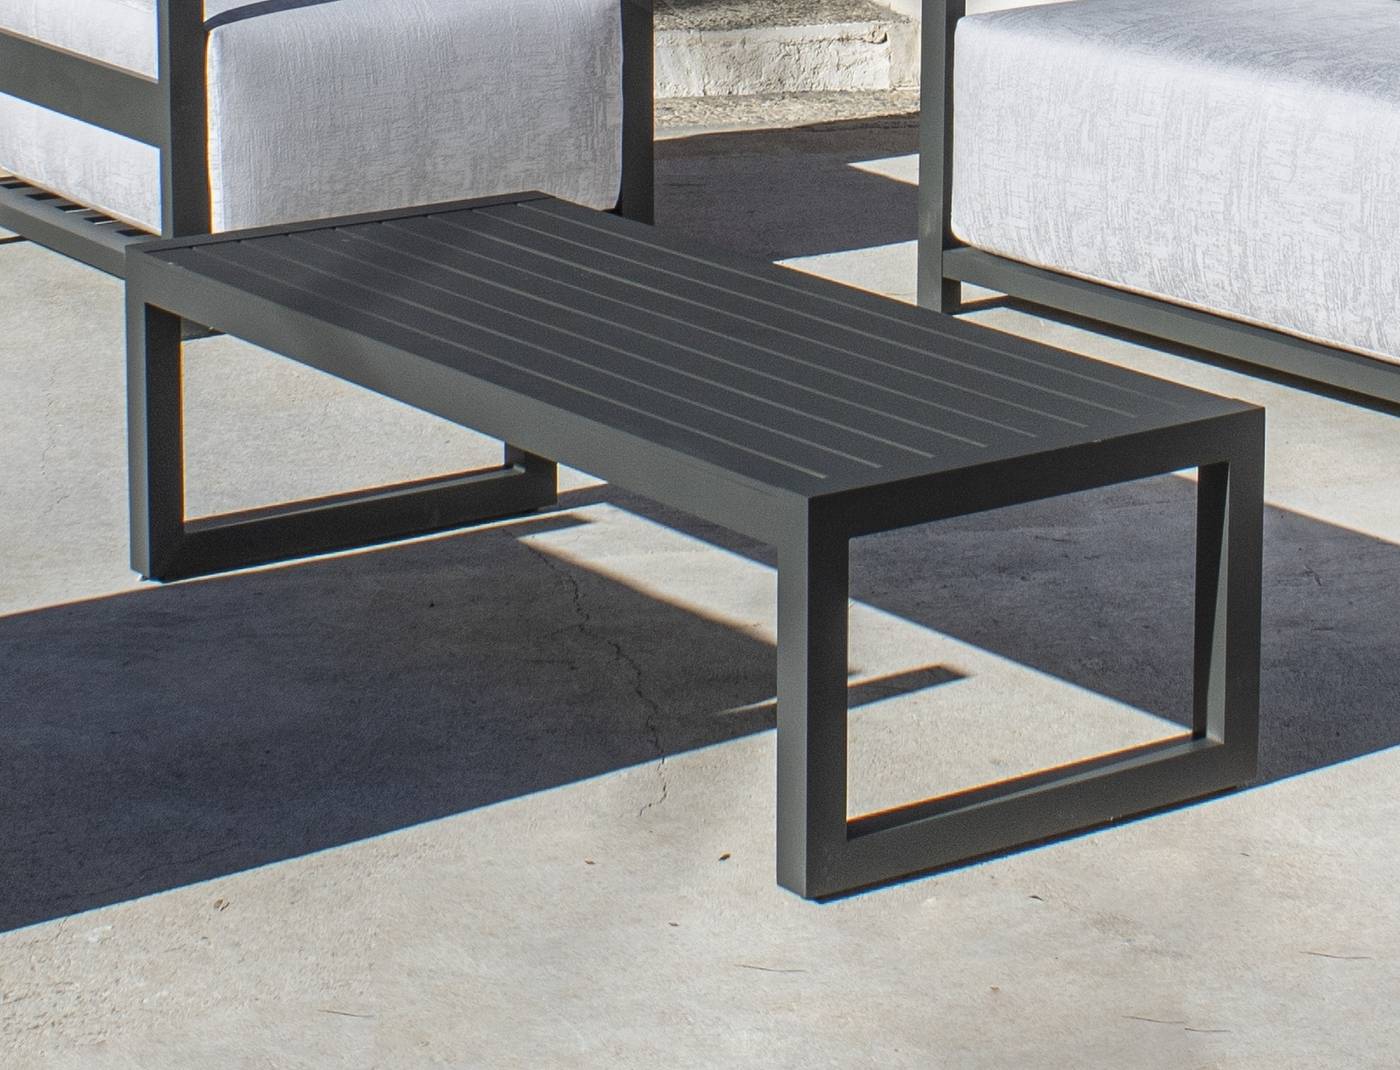 Set Aluminio Palermo-10 - Conjunto de aluminio: sofá de 3 plazas + 2 sillones + 1 mesa de centro + 2 reposapiés. Disponible en color blanco, antracita, marrón, champagne o plata.